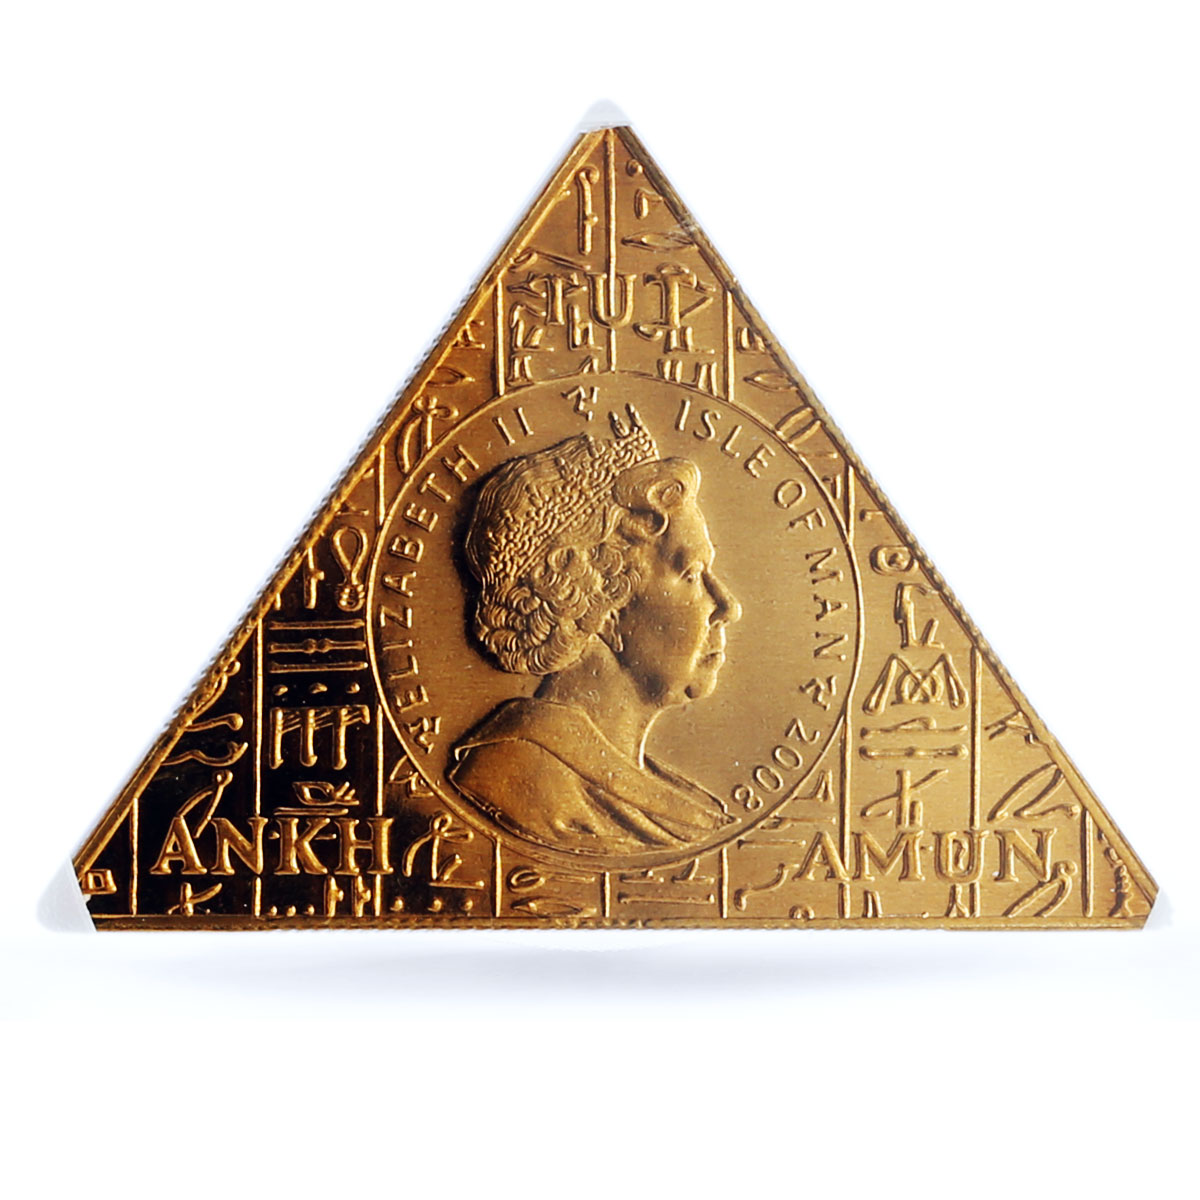 Isle of Man 1 crown Tutankhamun Coffin MS69 PCGS bronze coin 2008